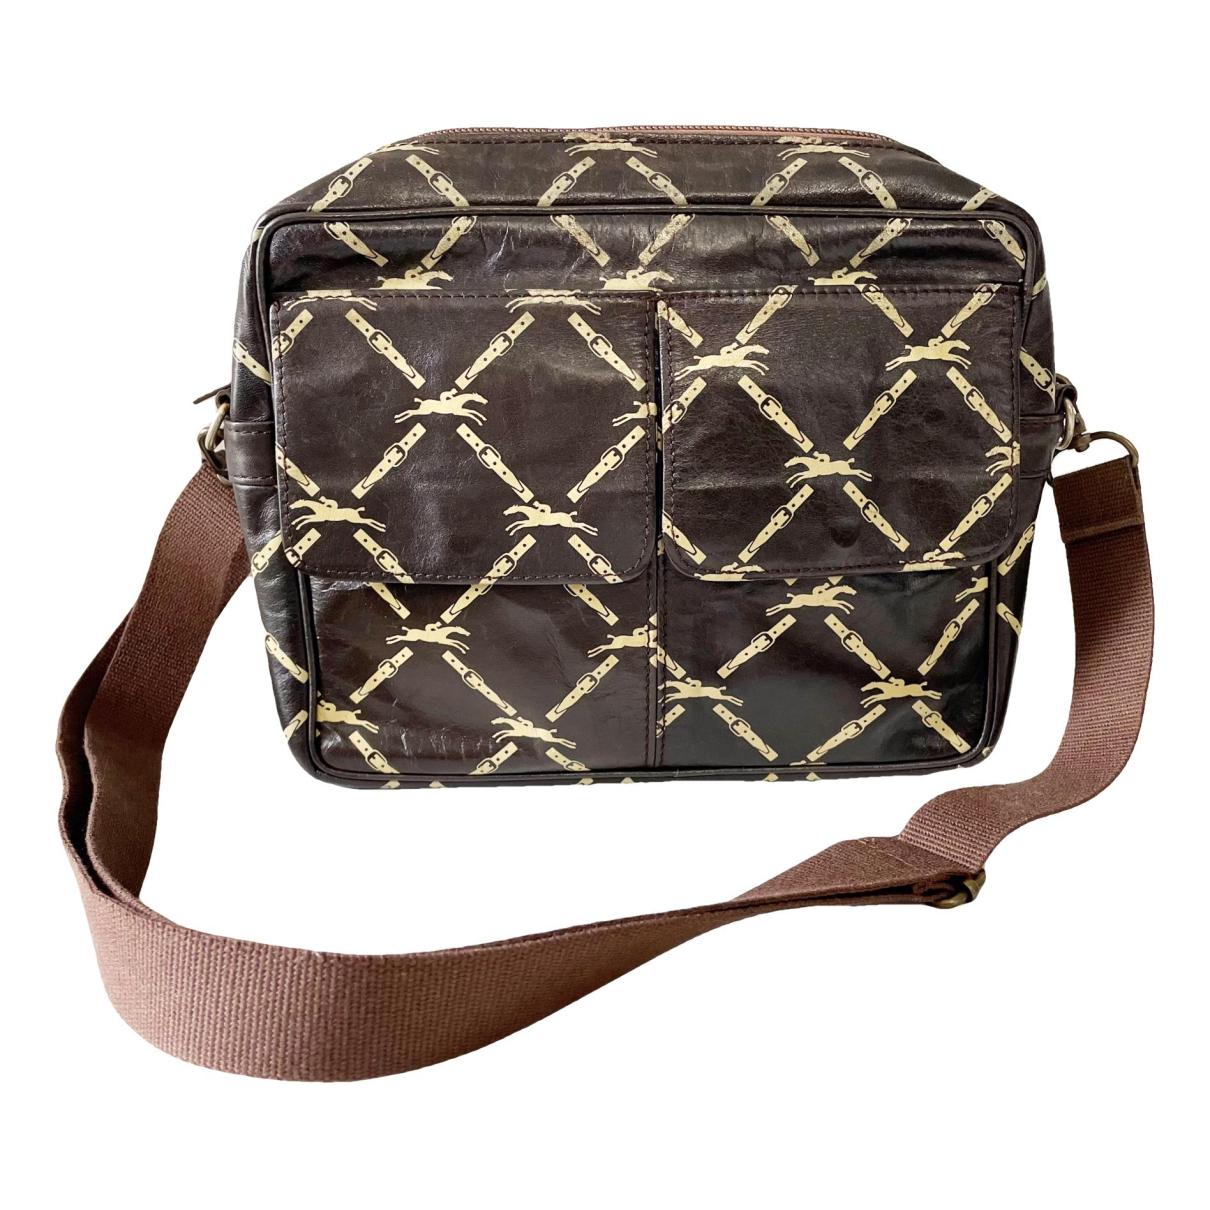 Vintage Longchamp Paris Handbag Shoulder Crossbody Bag 